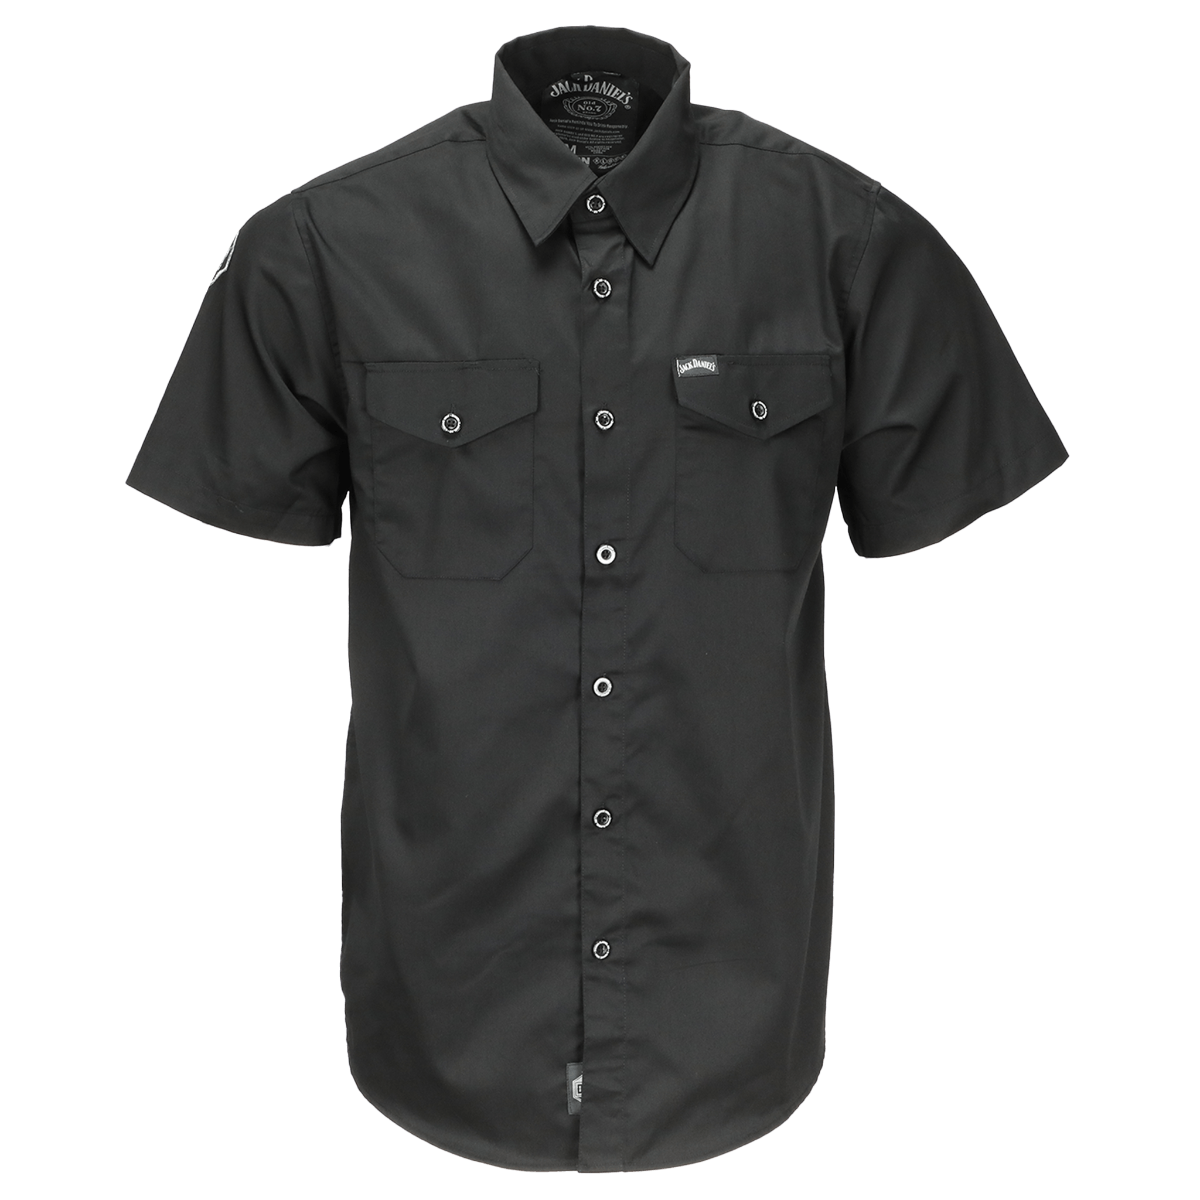 Jack Daniel's x Klock Werks Limited Edition Dixxon Mechanics Shirt(Jack Daniel's x Klock Werks Limited Edition Dixxon Mechanics Shirt)